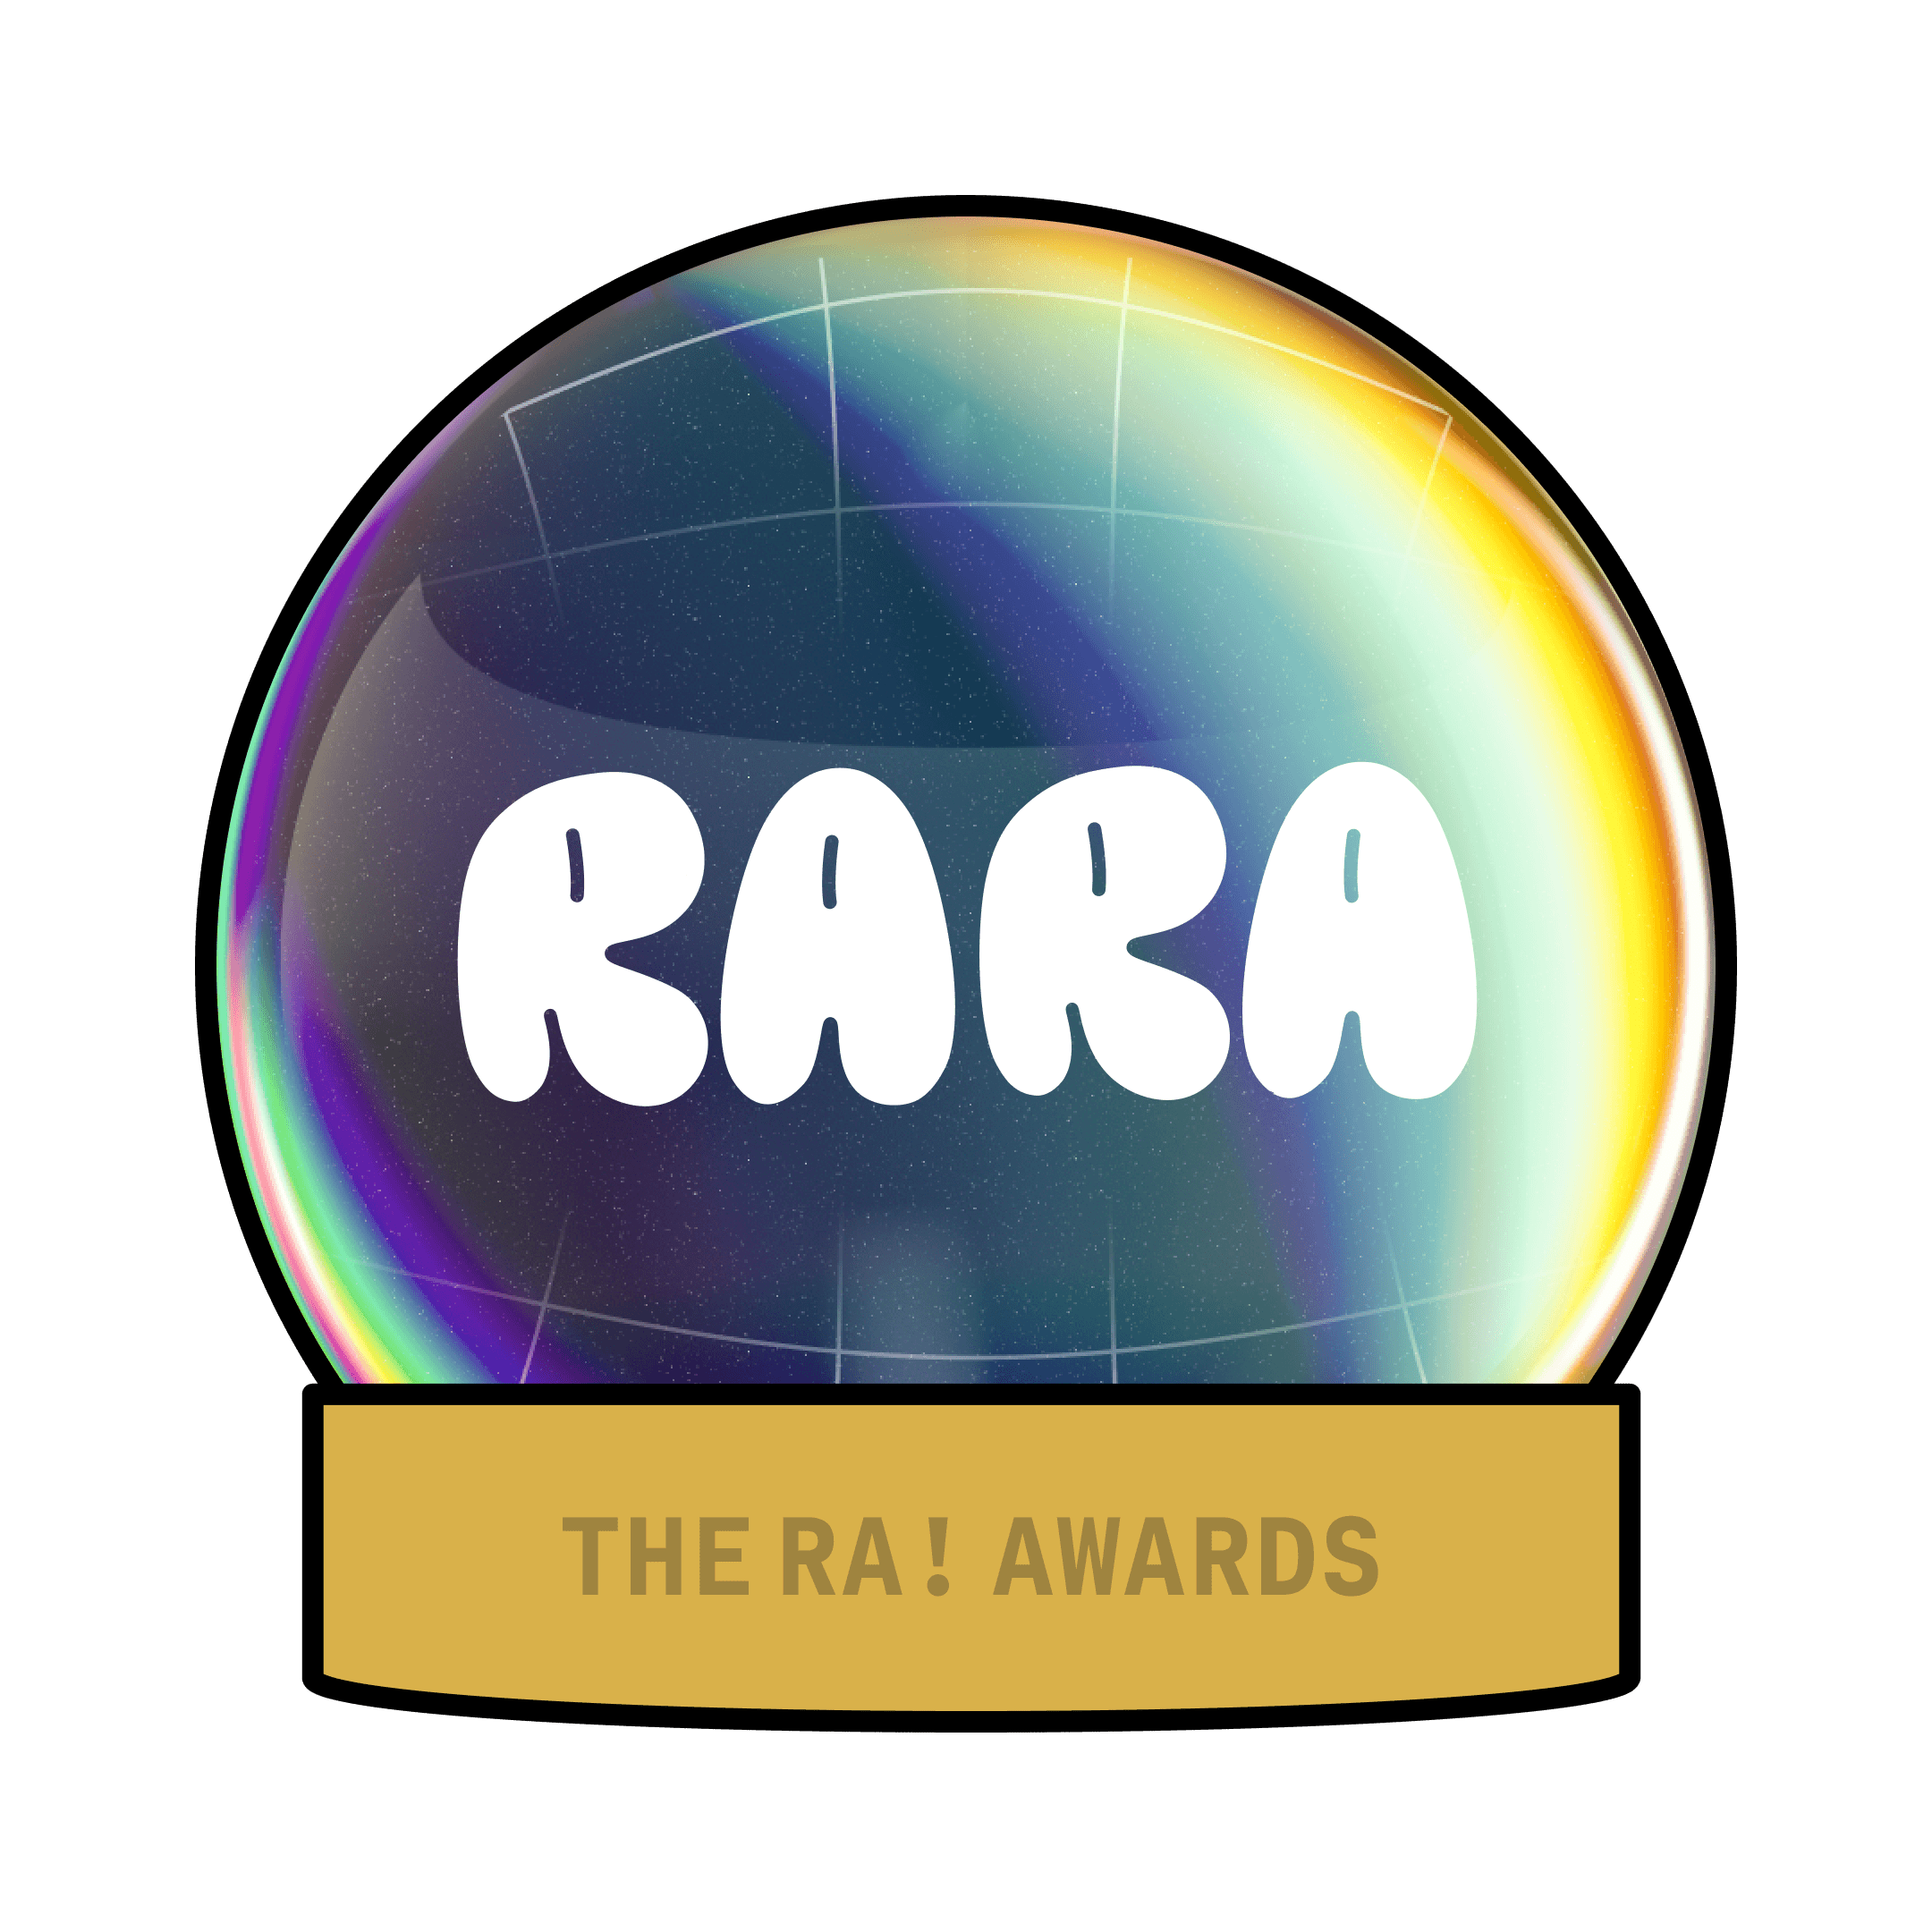 🏆 RA! Awards